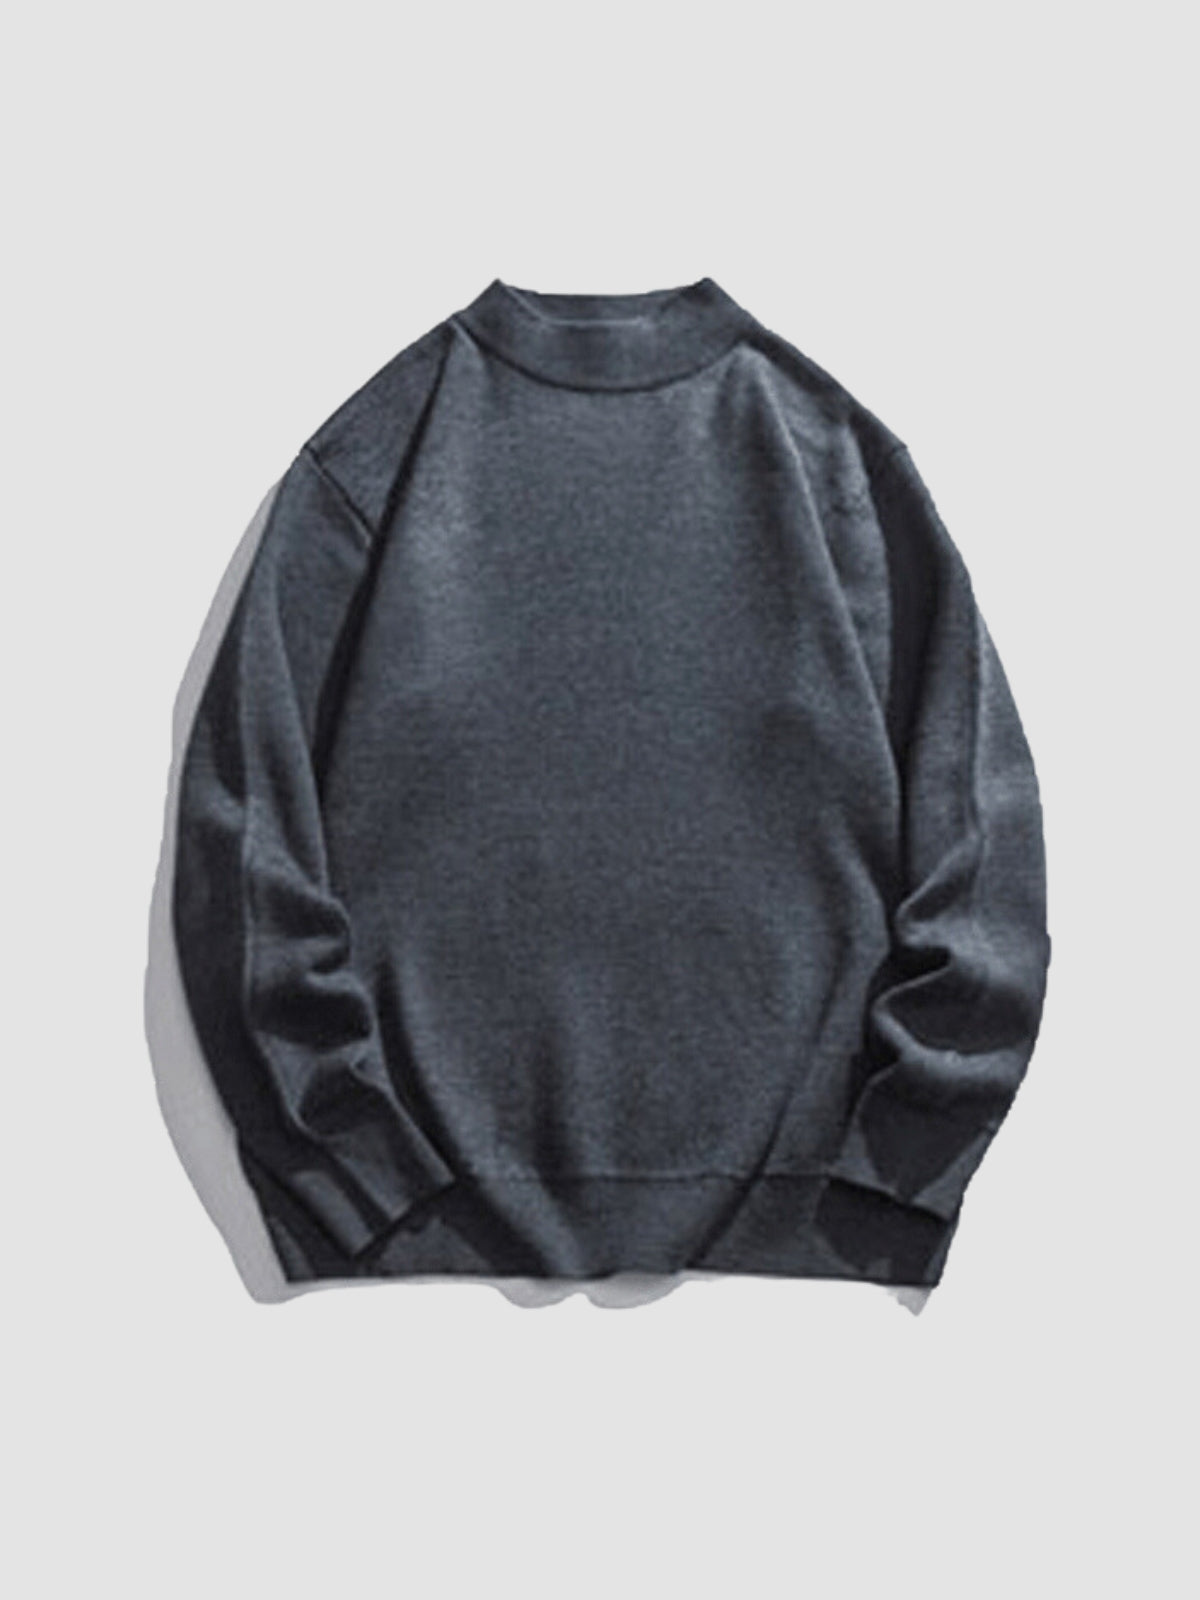 WLS Retro Half Turtleneck Solid Loose Sweater